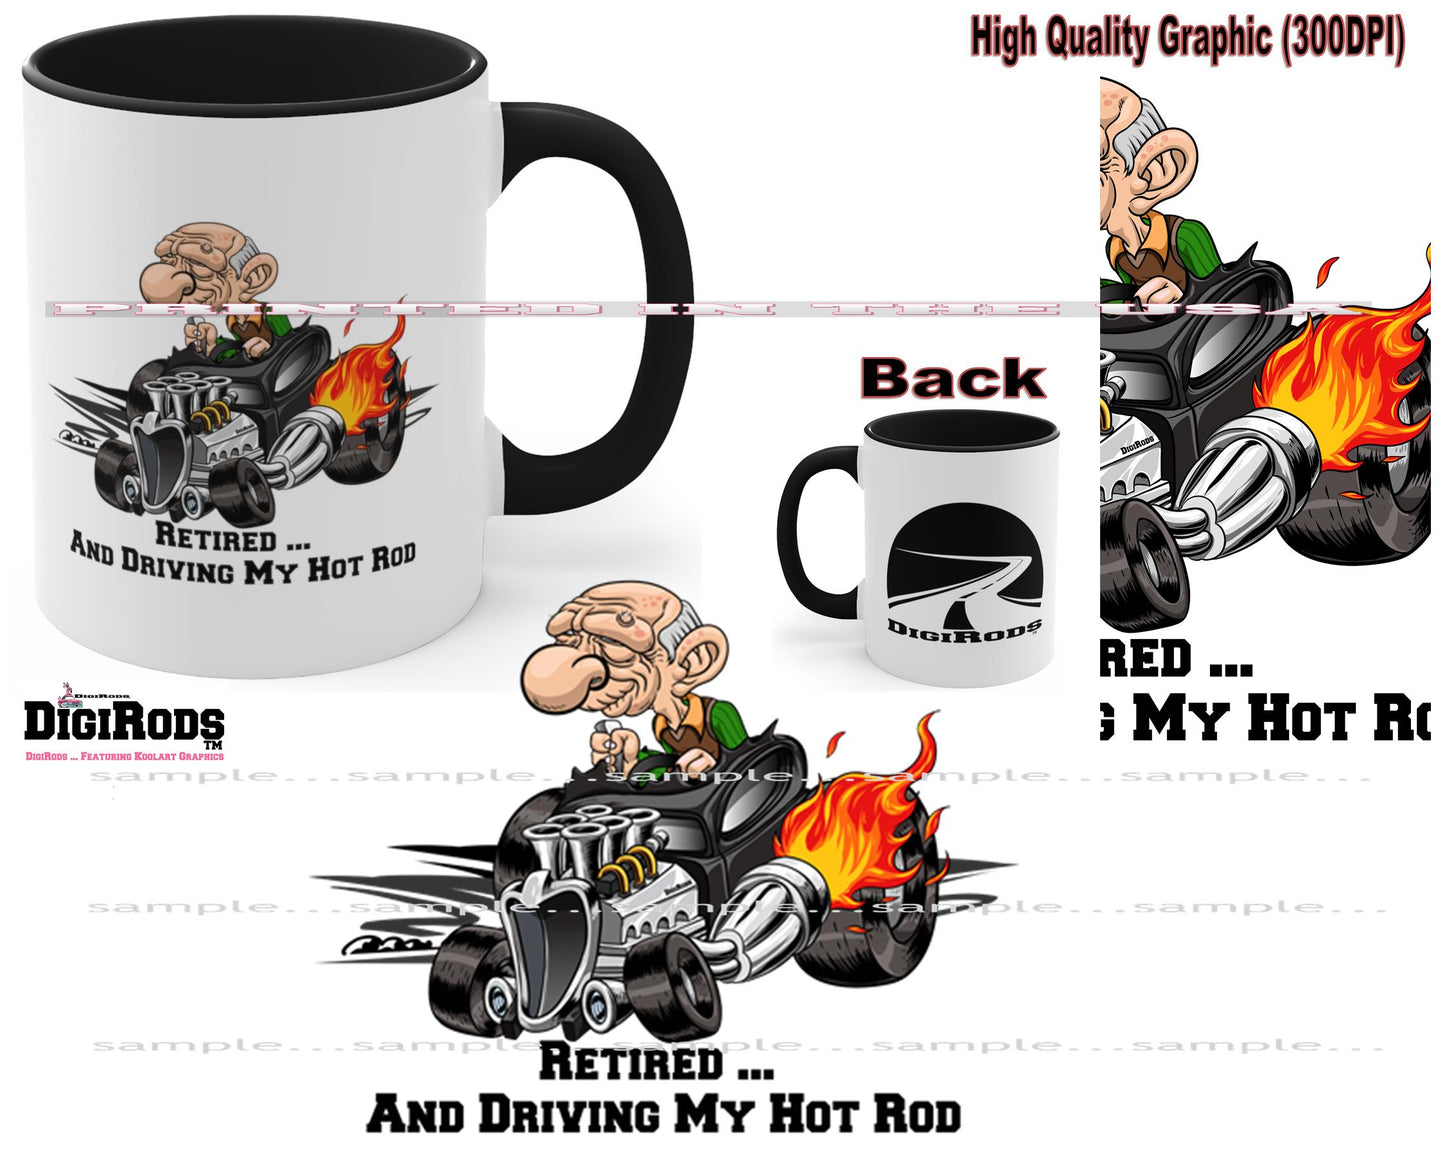 Hot Rod Coffee Mug